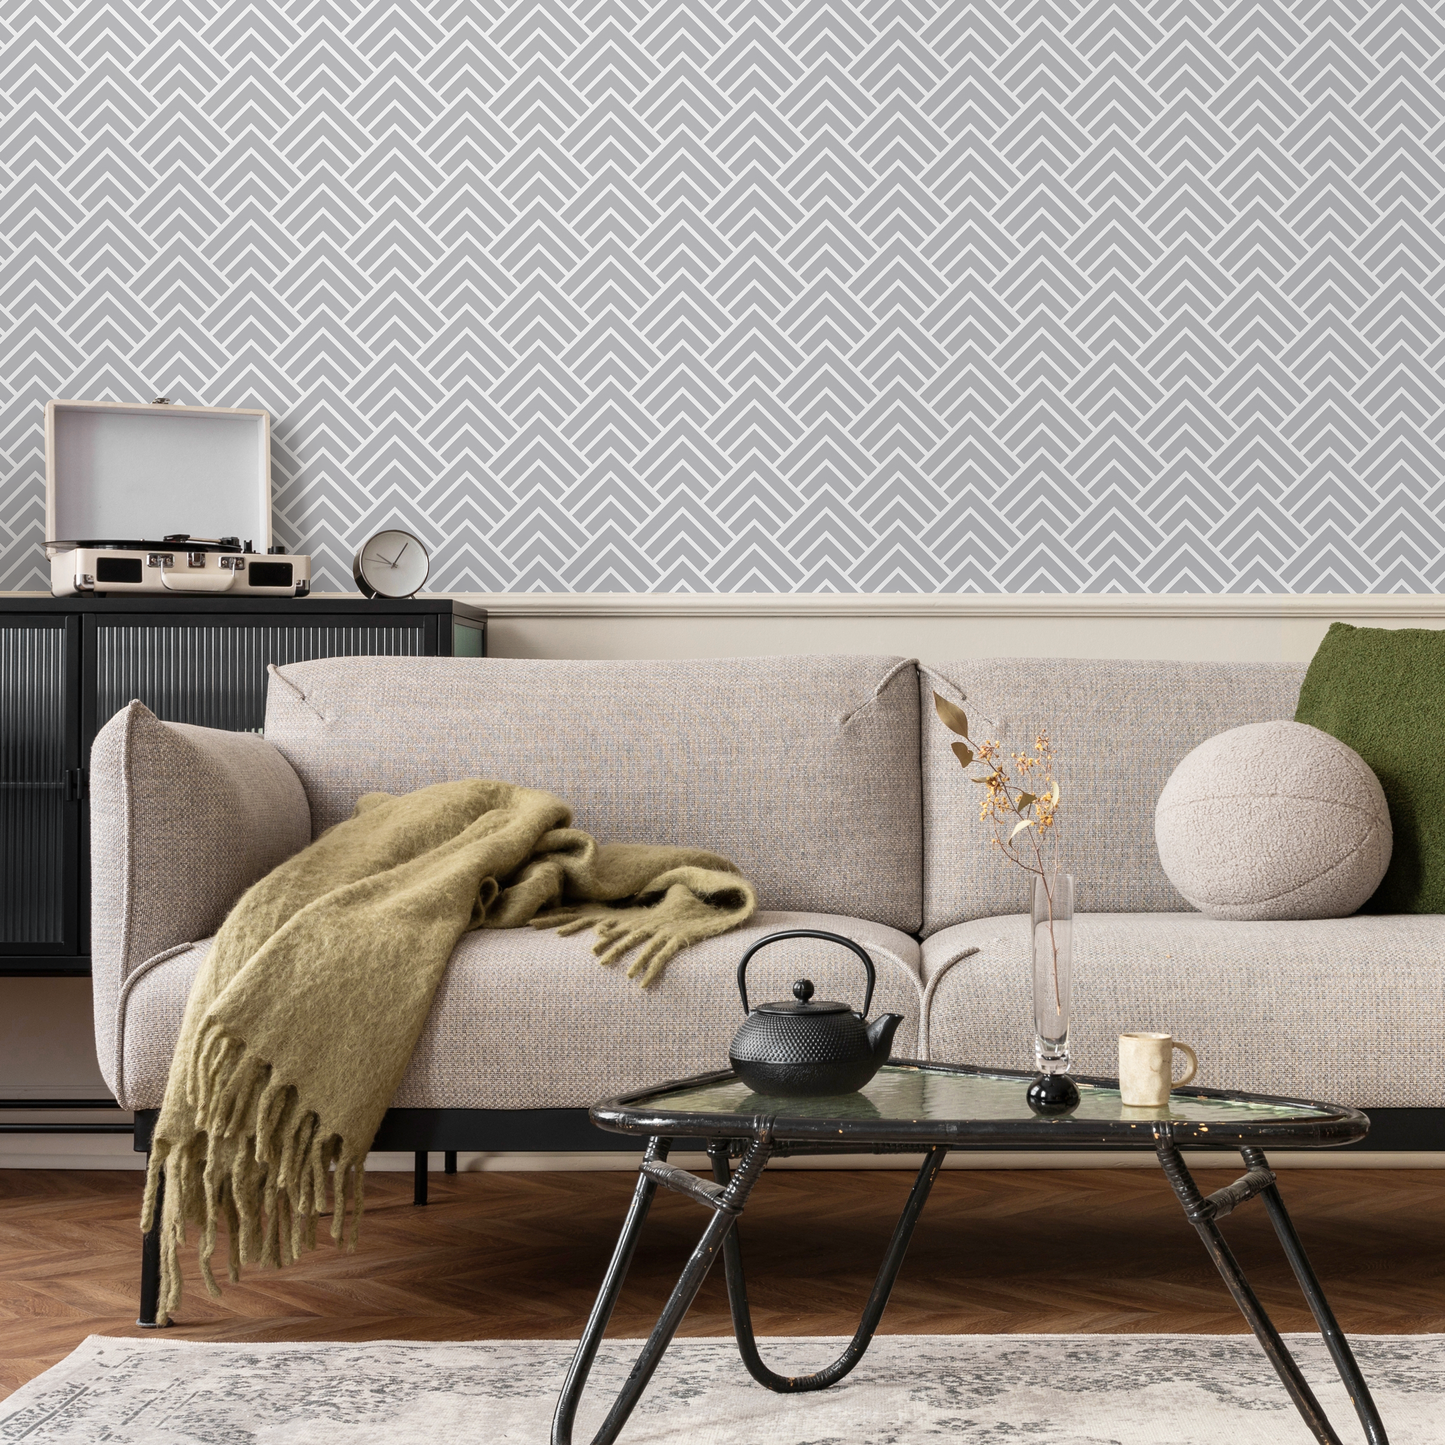 Removable Wallpaper, Scandinavian Wallpaper, Temporary Wallpaper, Minimalistic Wallpaper, Peel and Stick Wallpaper, Wall Paper, Boho - A329